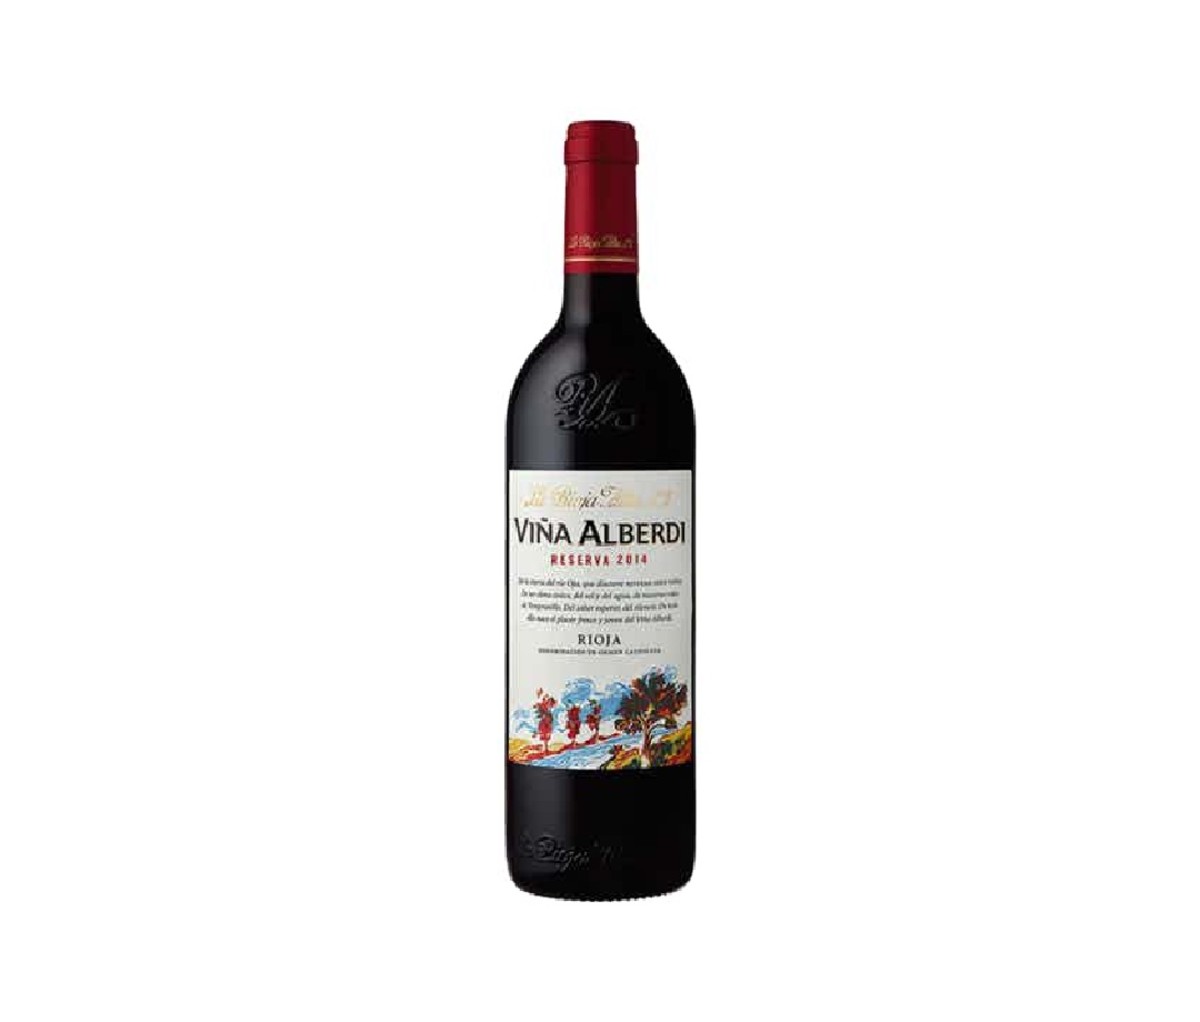 Vina Alberdi from La Rioja Alta